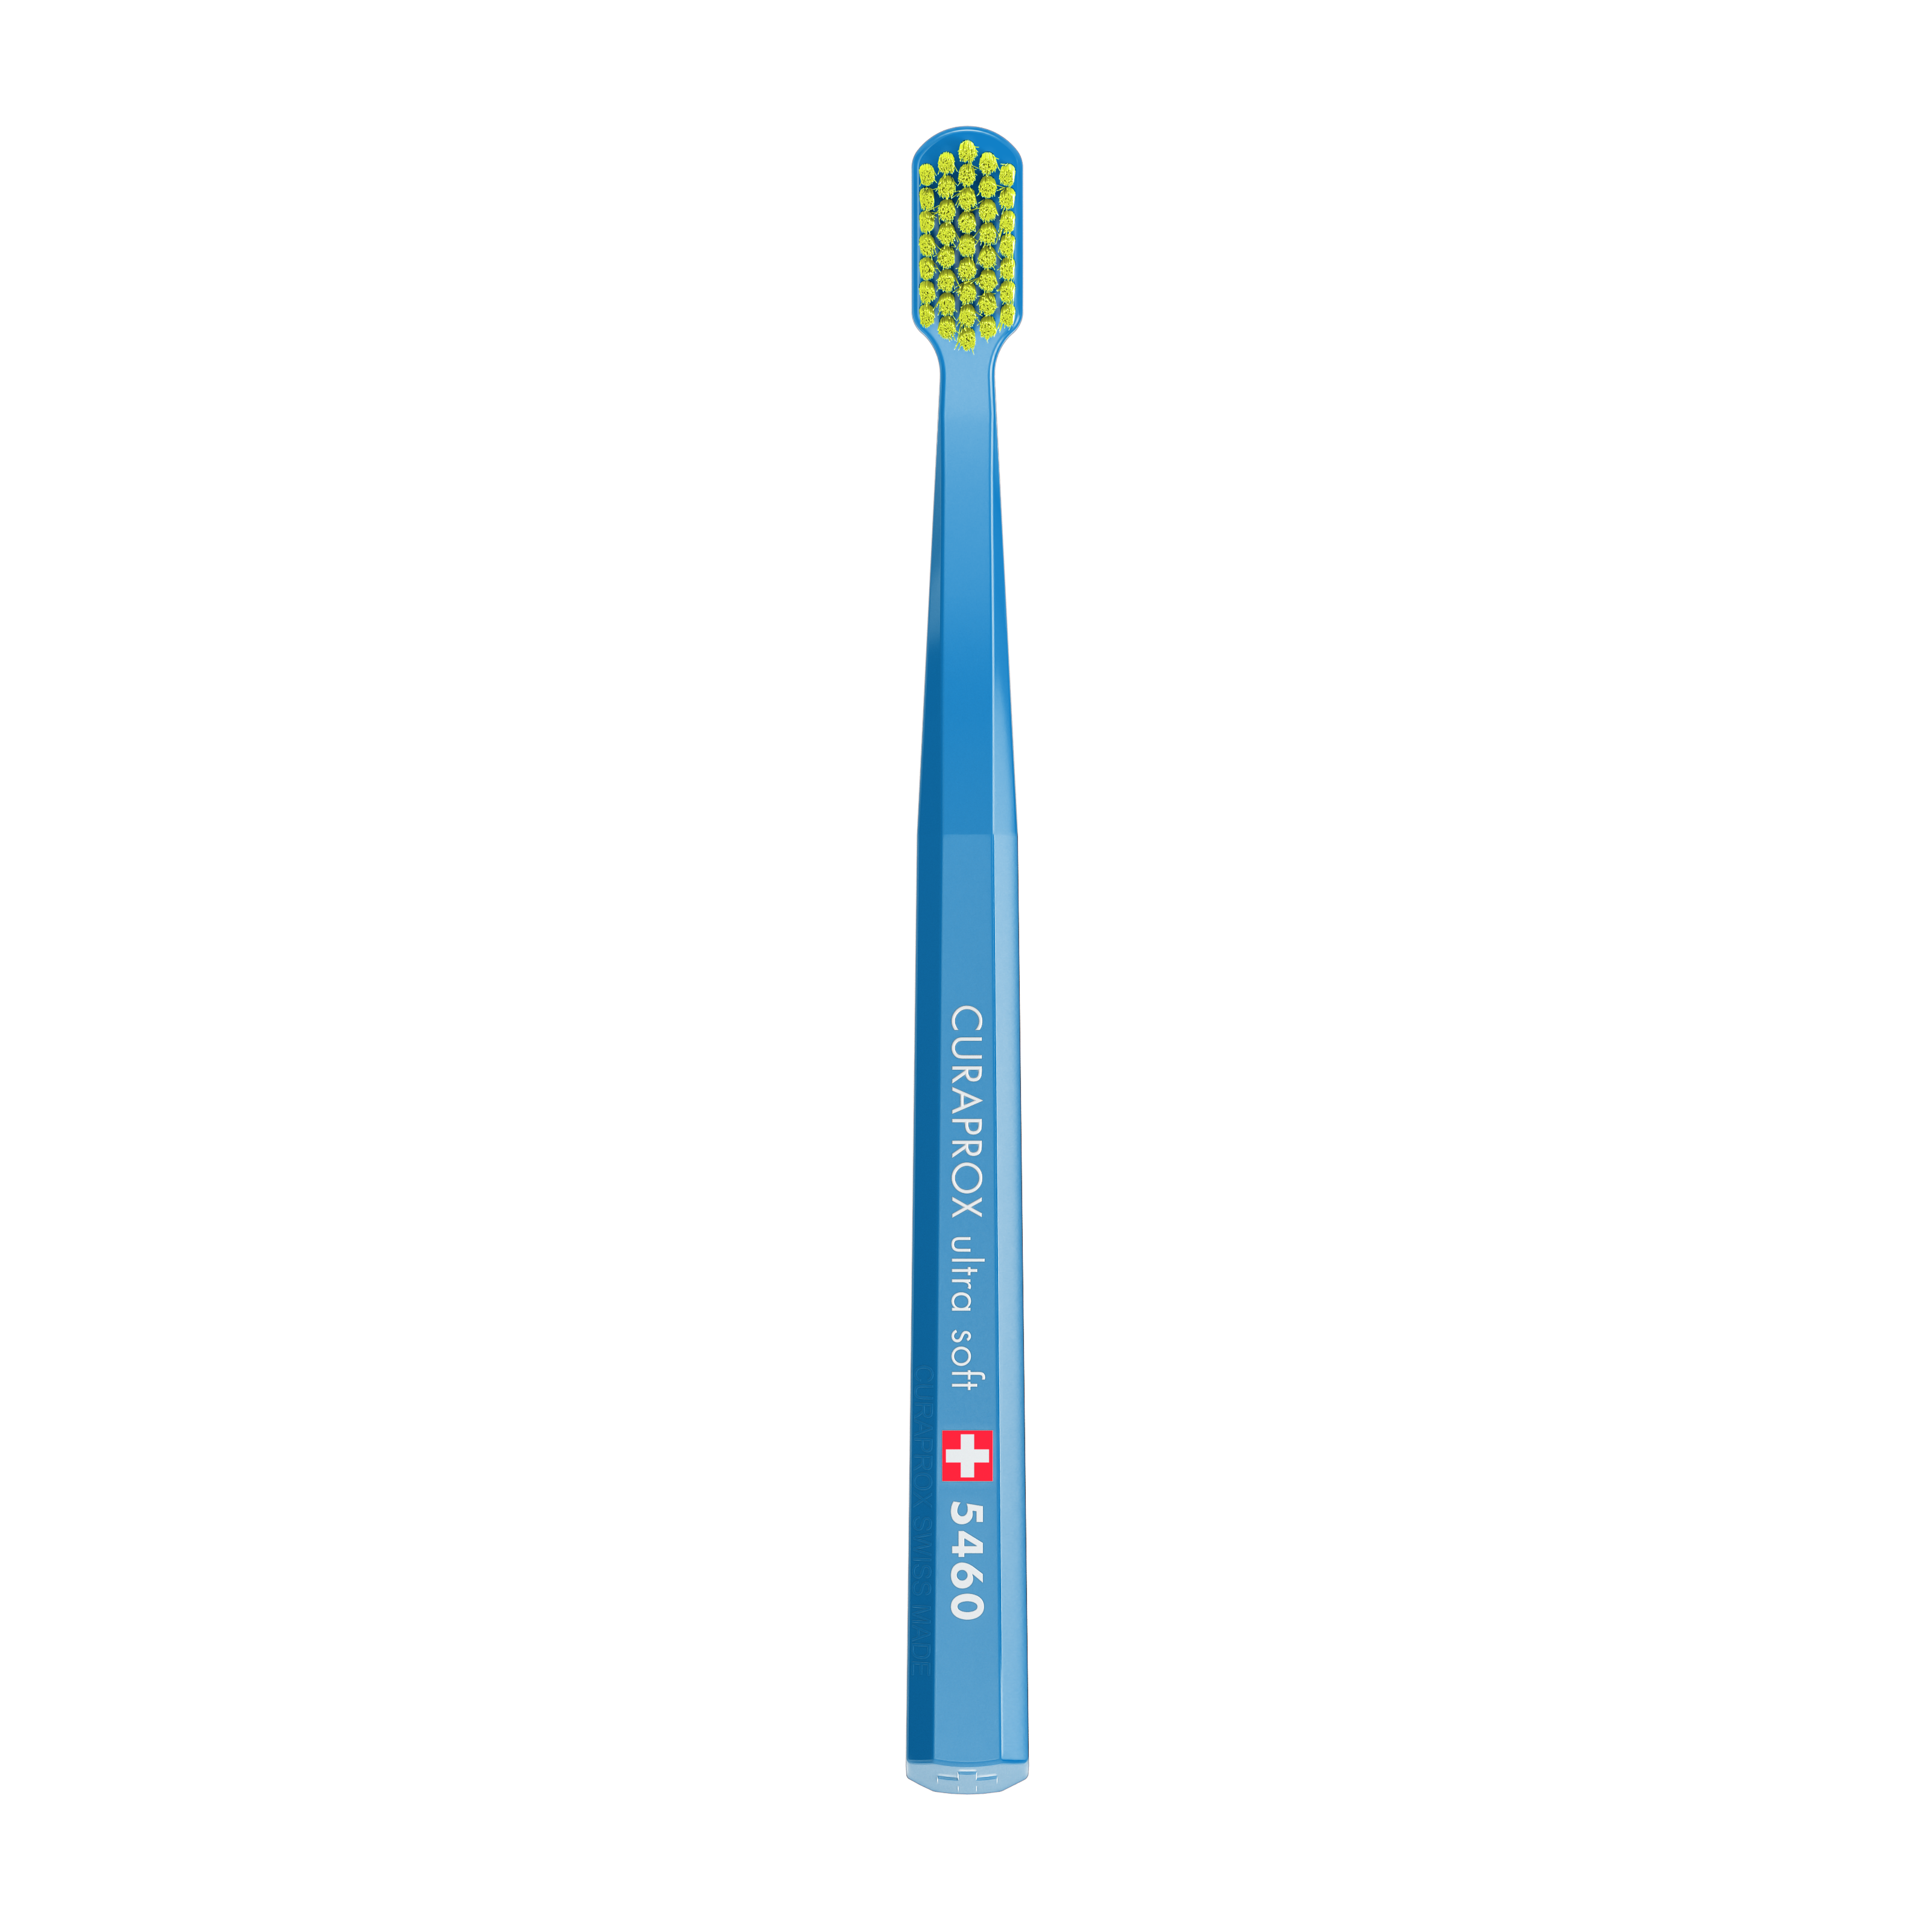 Productshot Toothbrush Cs5460 Light Blue Green Front